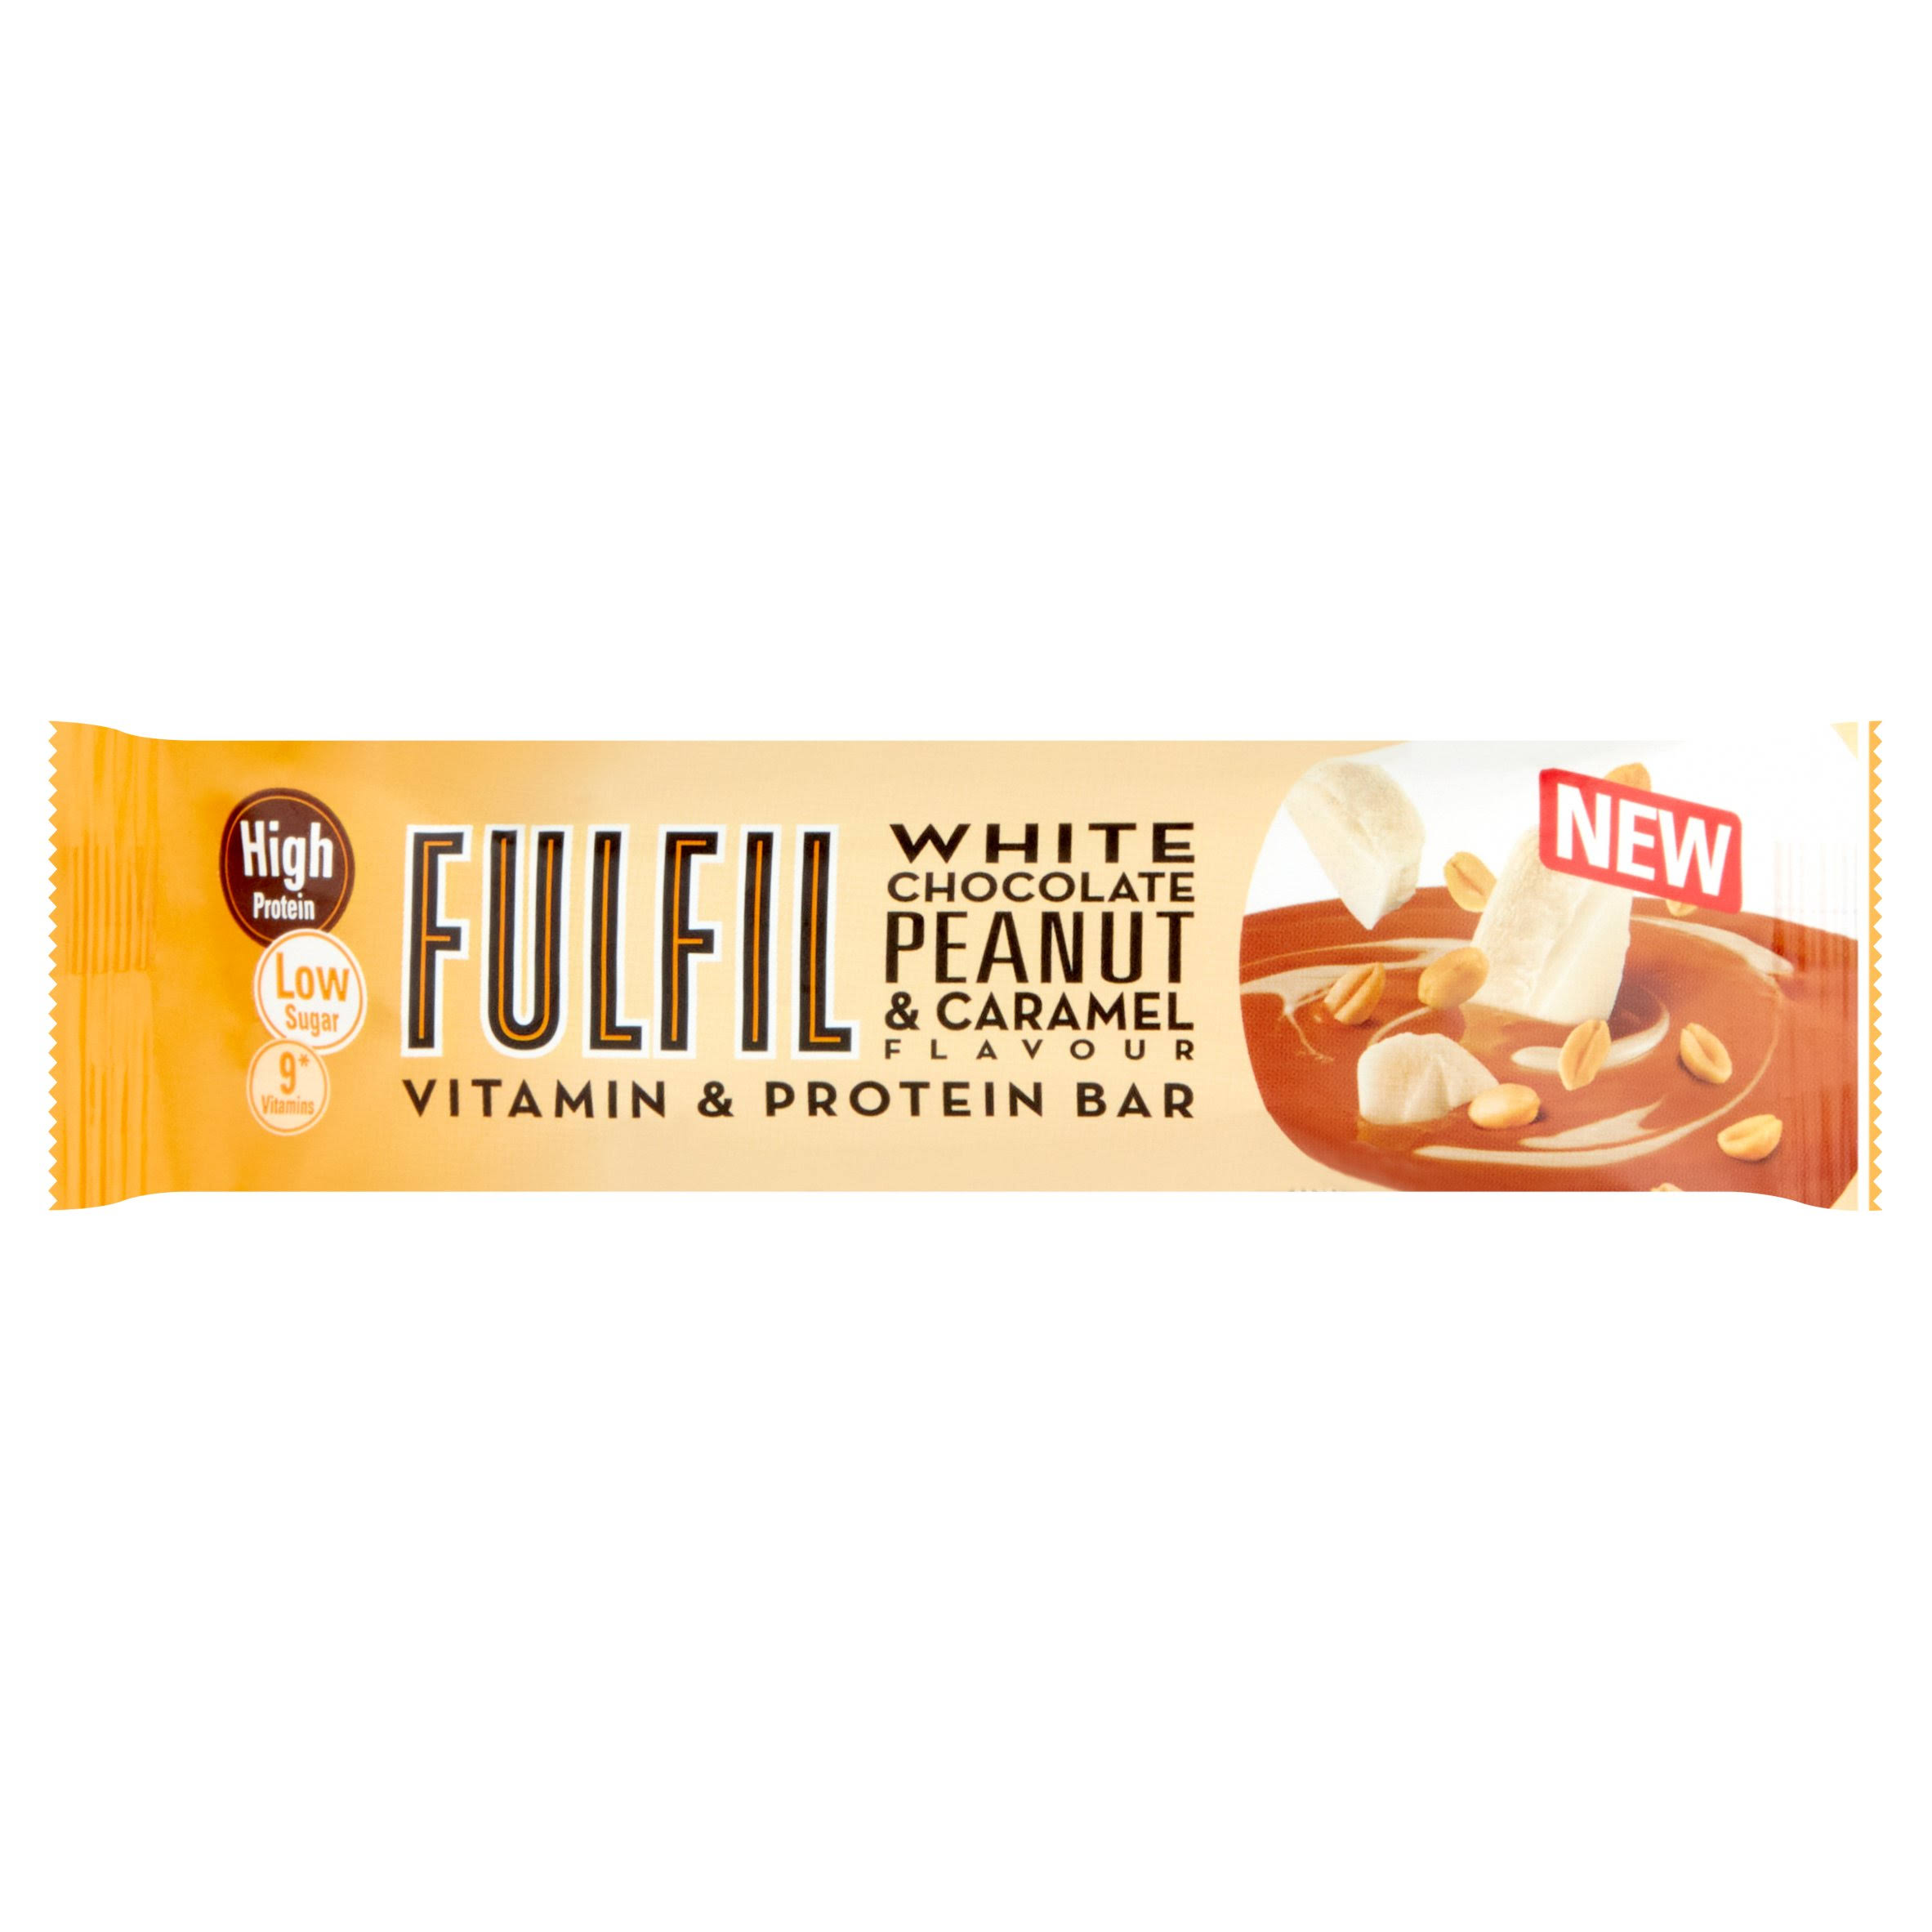 White Chocolate Peanut & Caramel | FULFIL Single - 55g